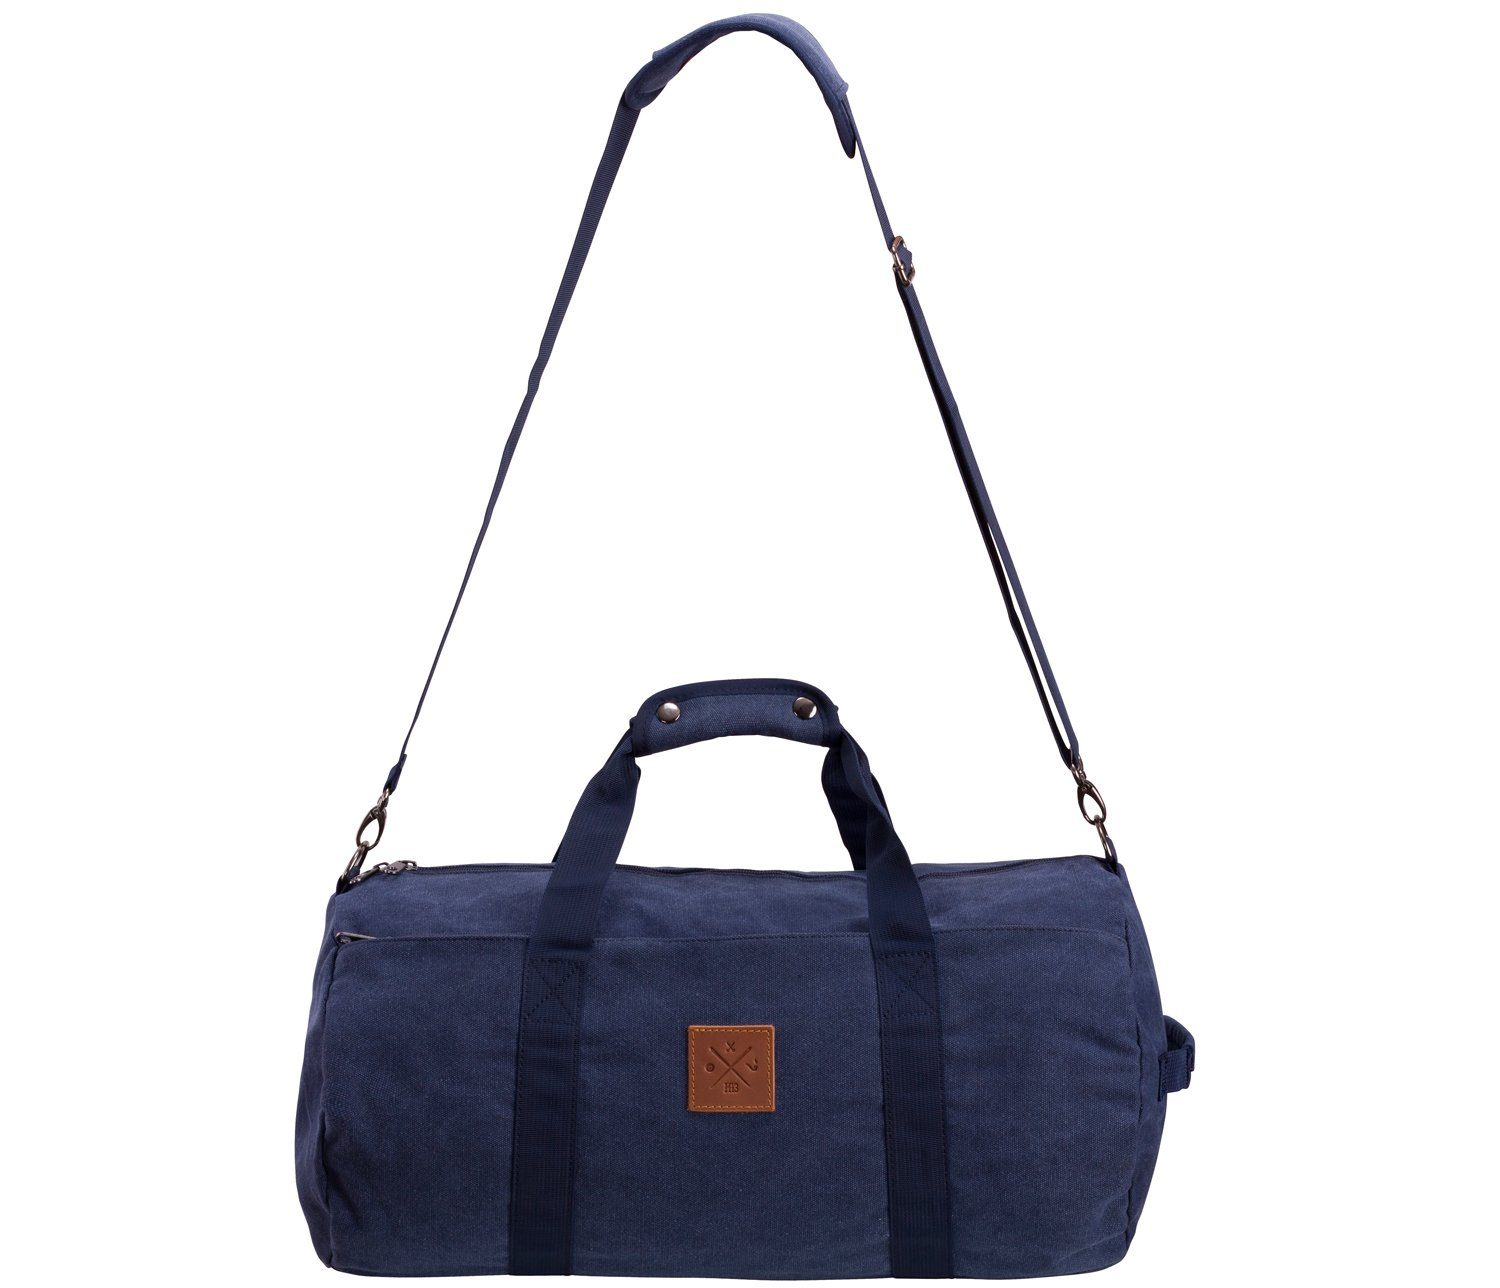 Manufaktur13 Sporttasche - Bag Duffel Navy Sporttasche, Bag, Fassungsvermögen 24L Barrel Canvas